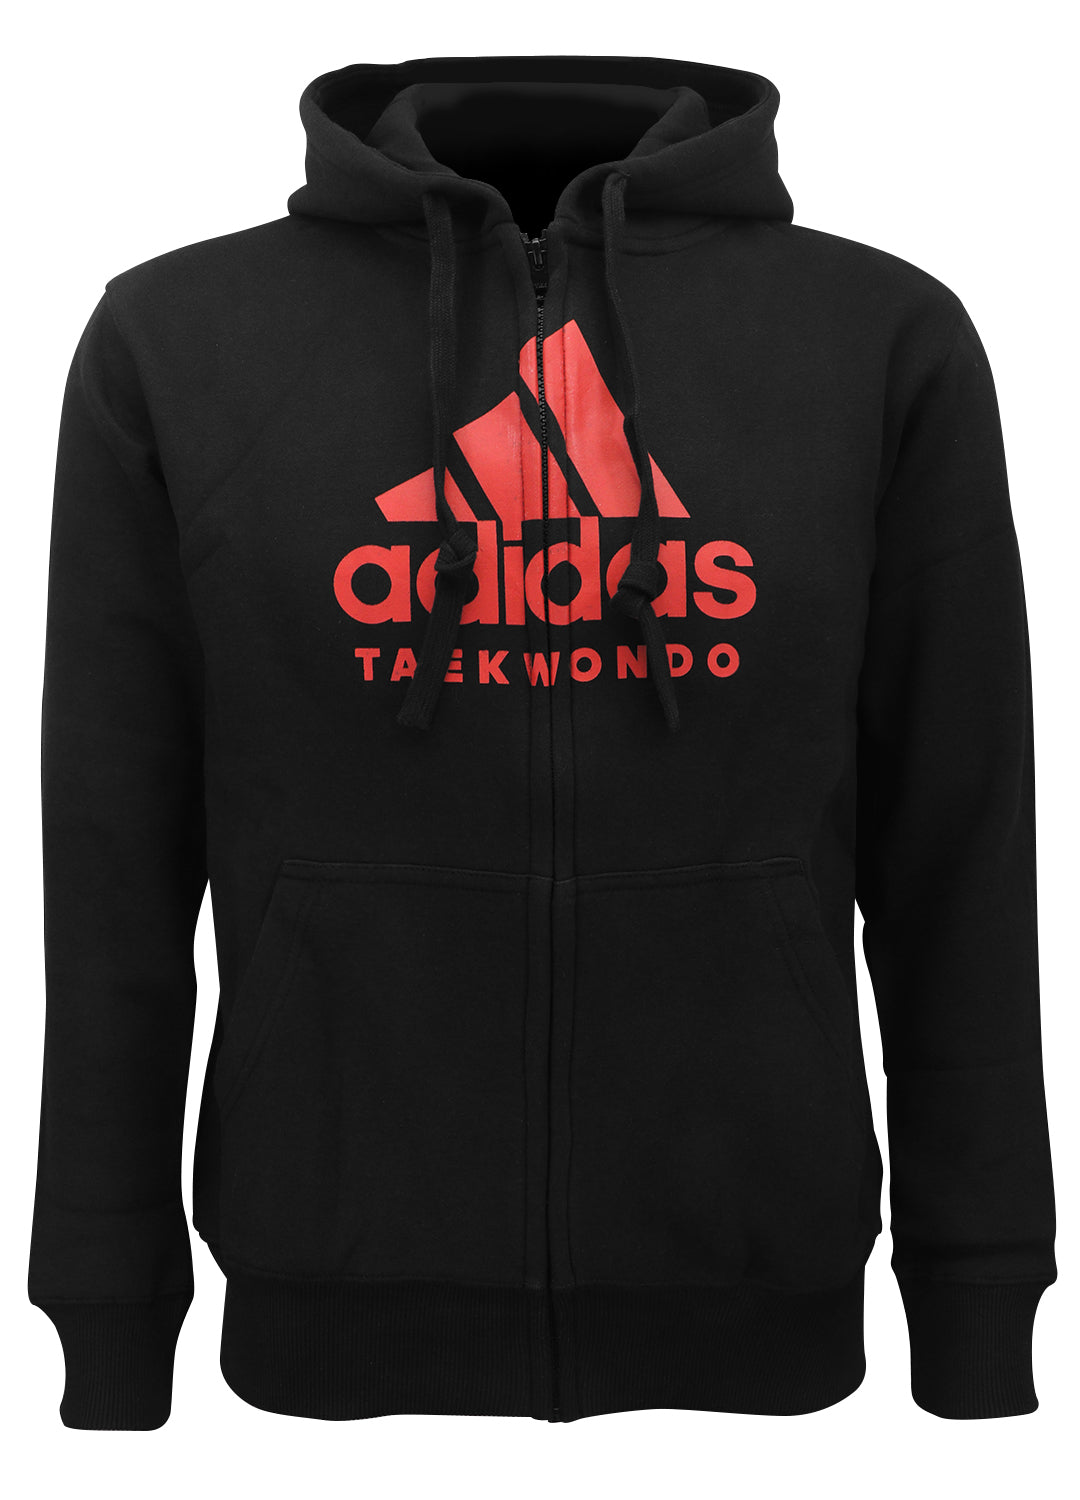 Adidas Taekwondo full zip Hoodie – All 